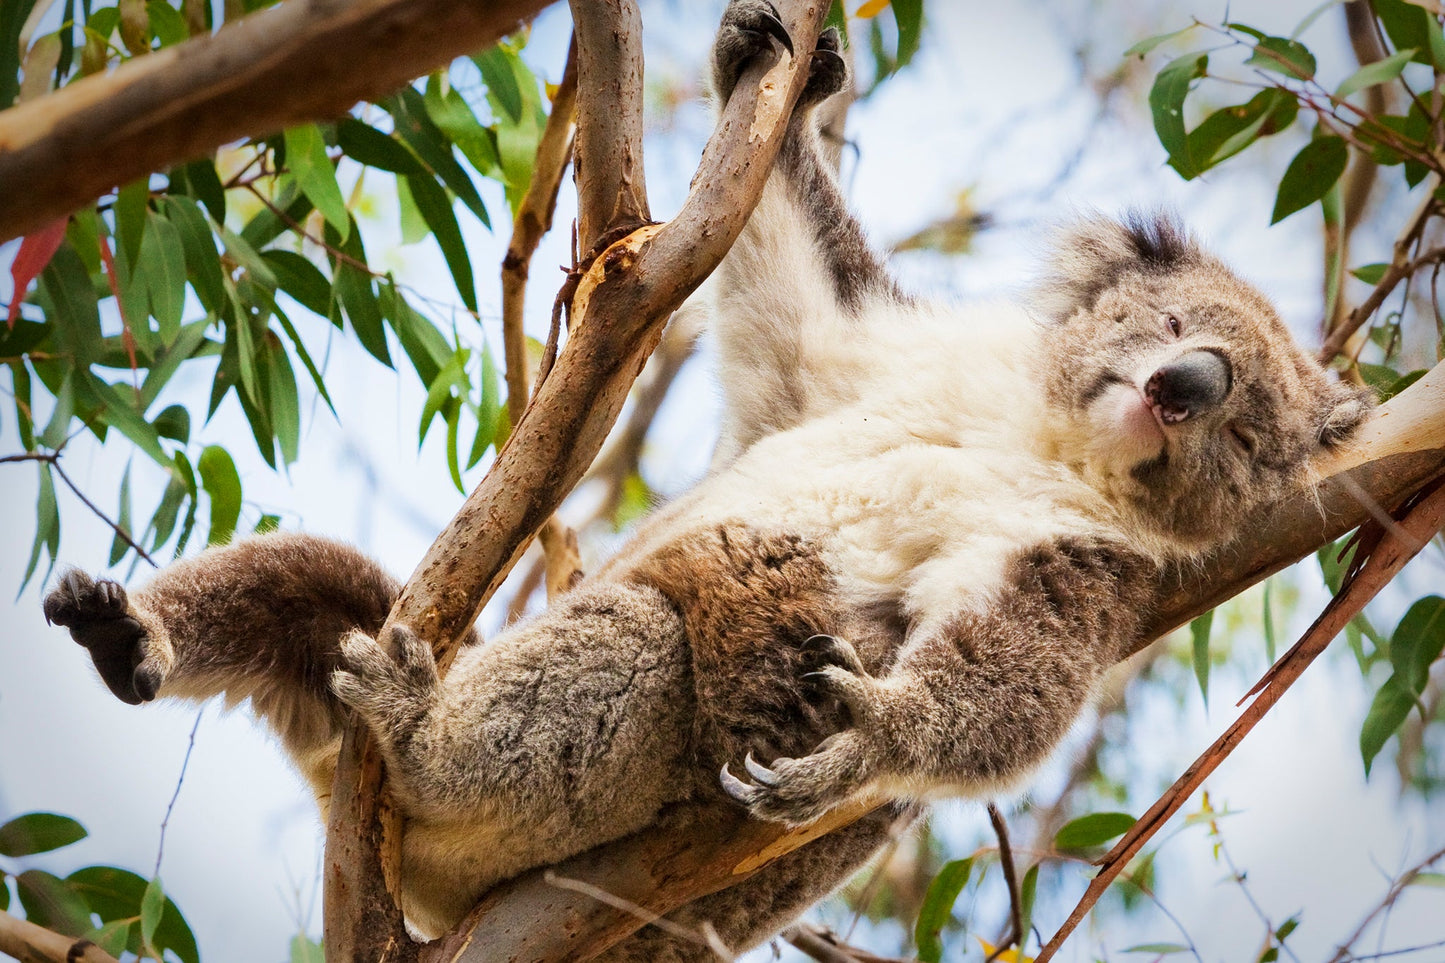 Just chillin' - Koala, Great Ocean Road Victoria